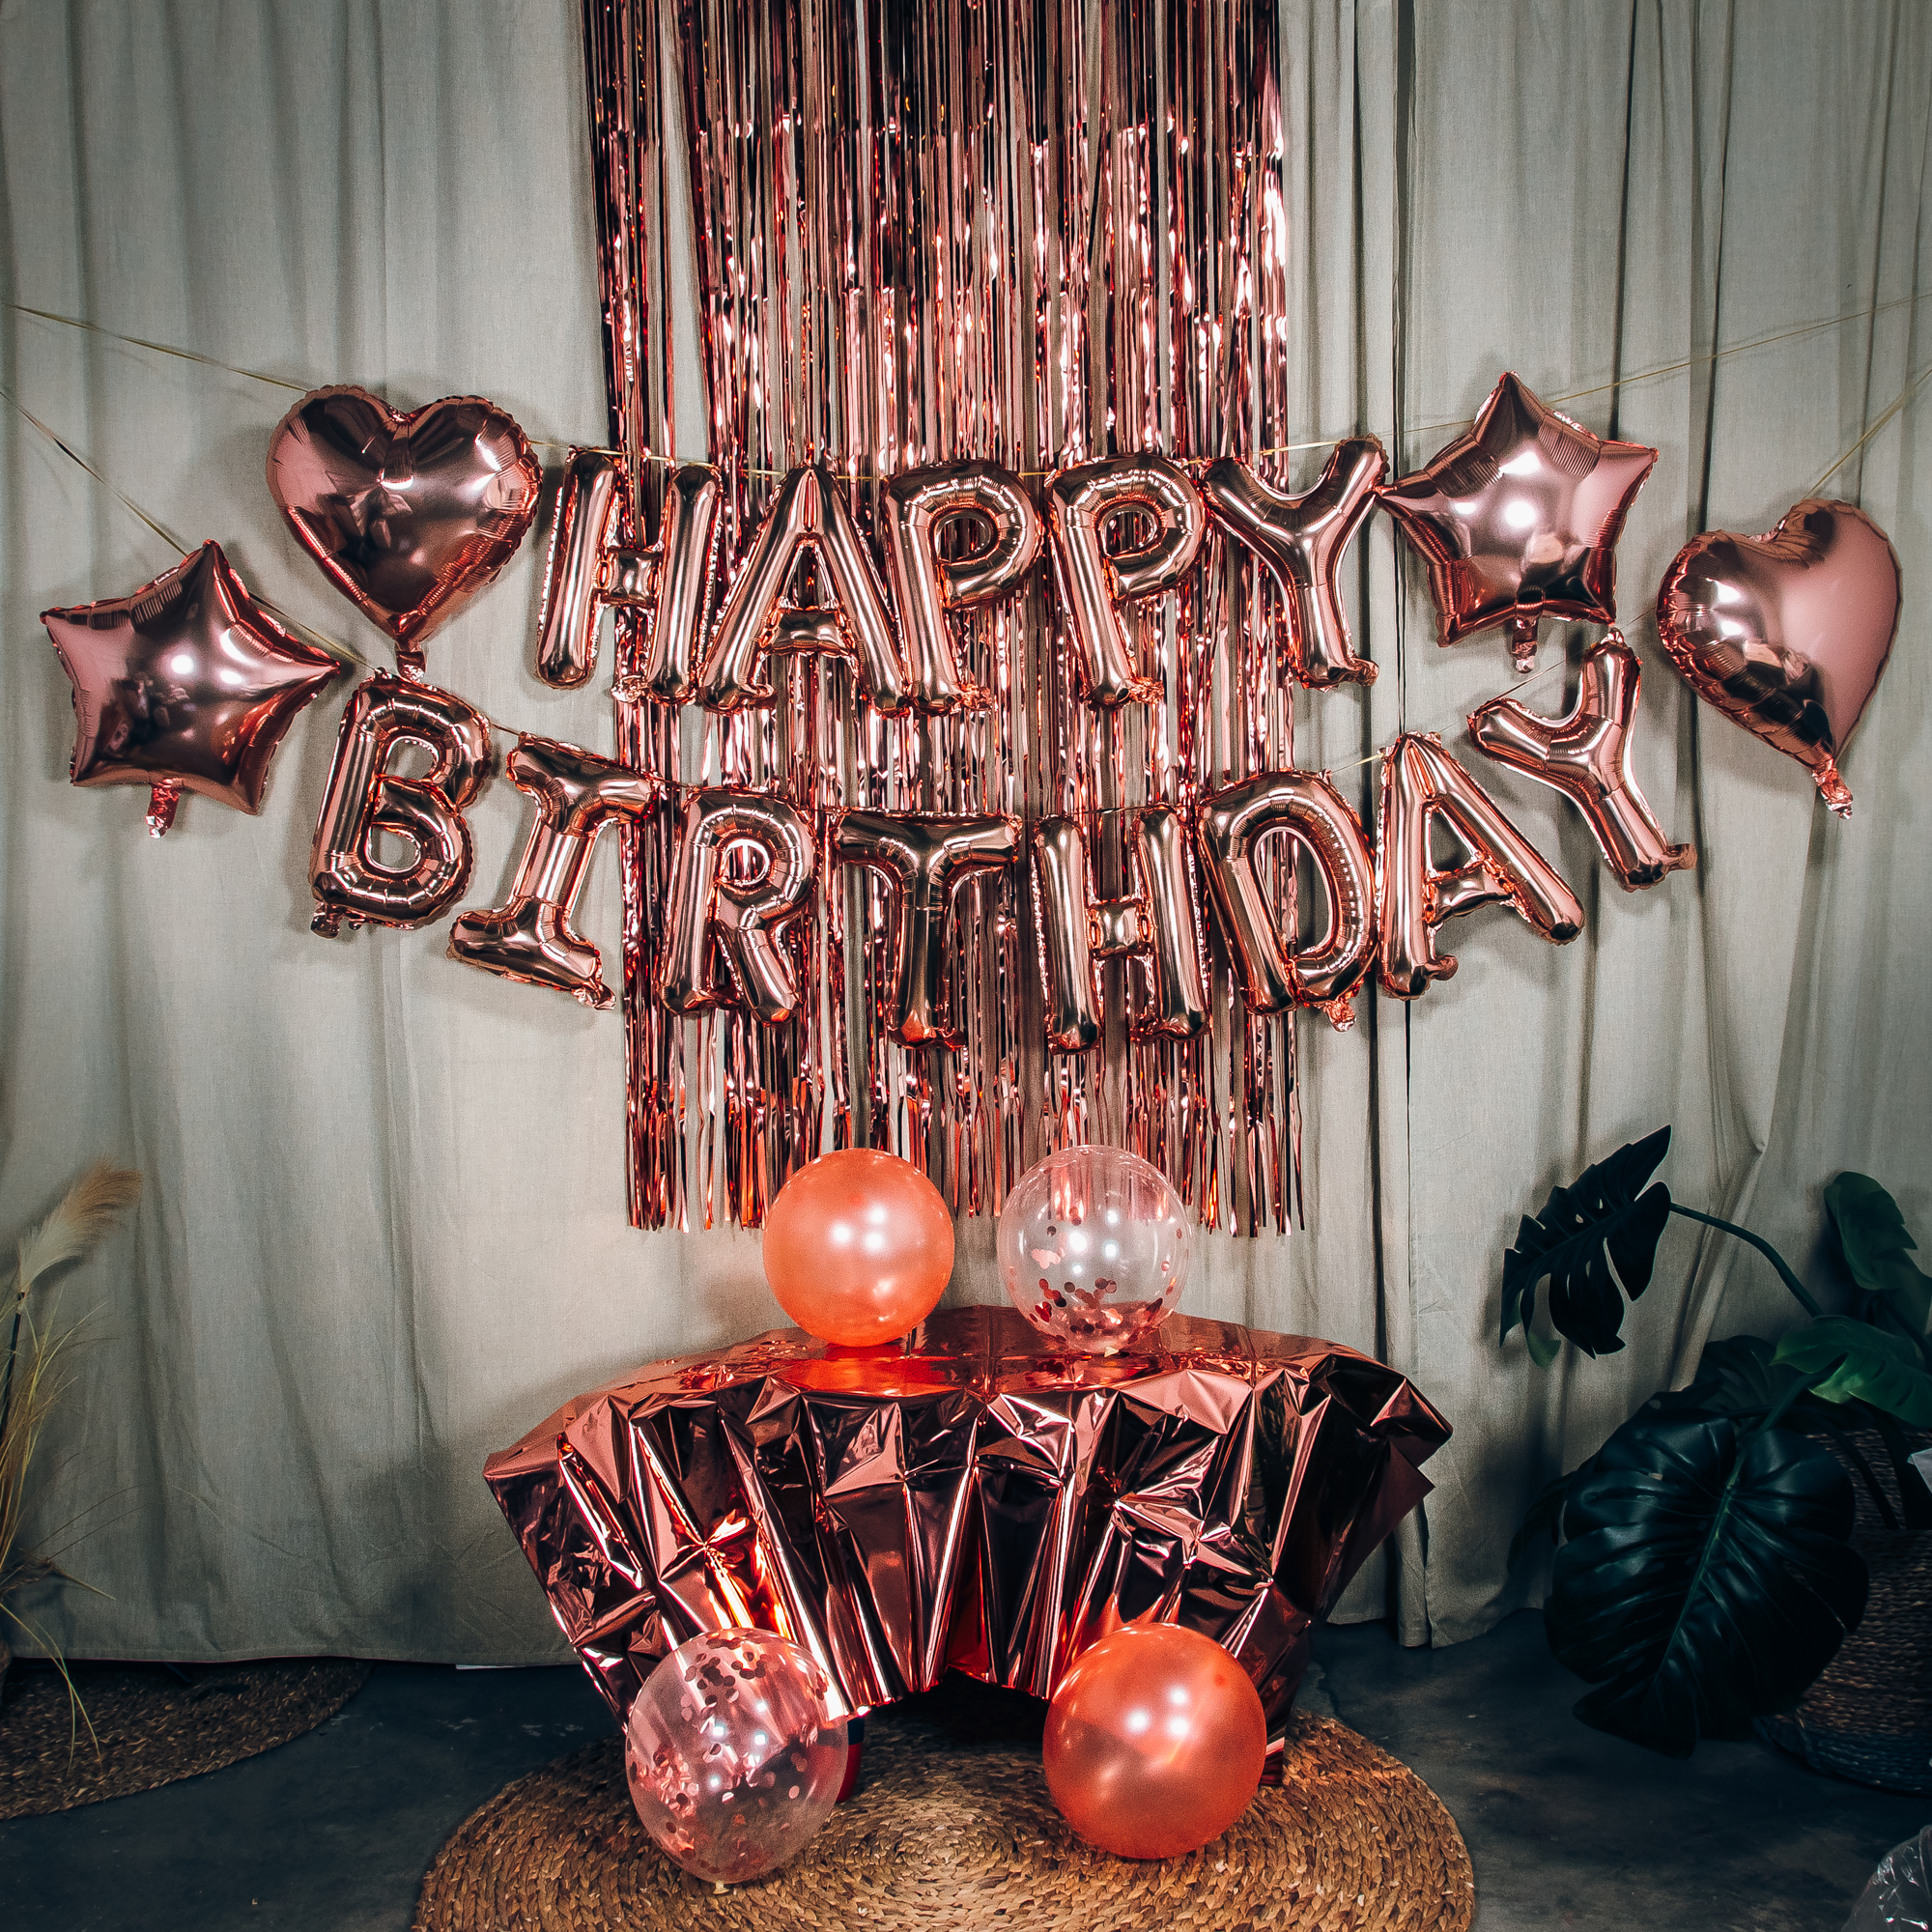 45pcs Happy Birthday Tassel & Balloon Combo Set (Rose Gold/Silver) - Children | Adult | Party | Decoration